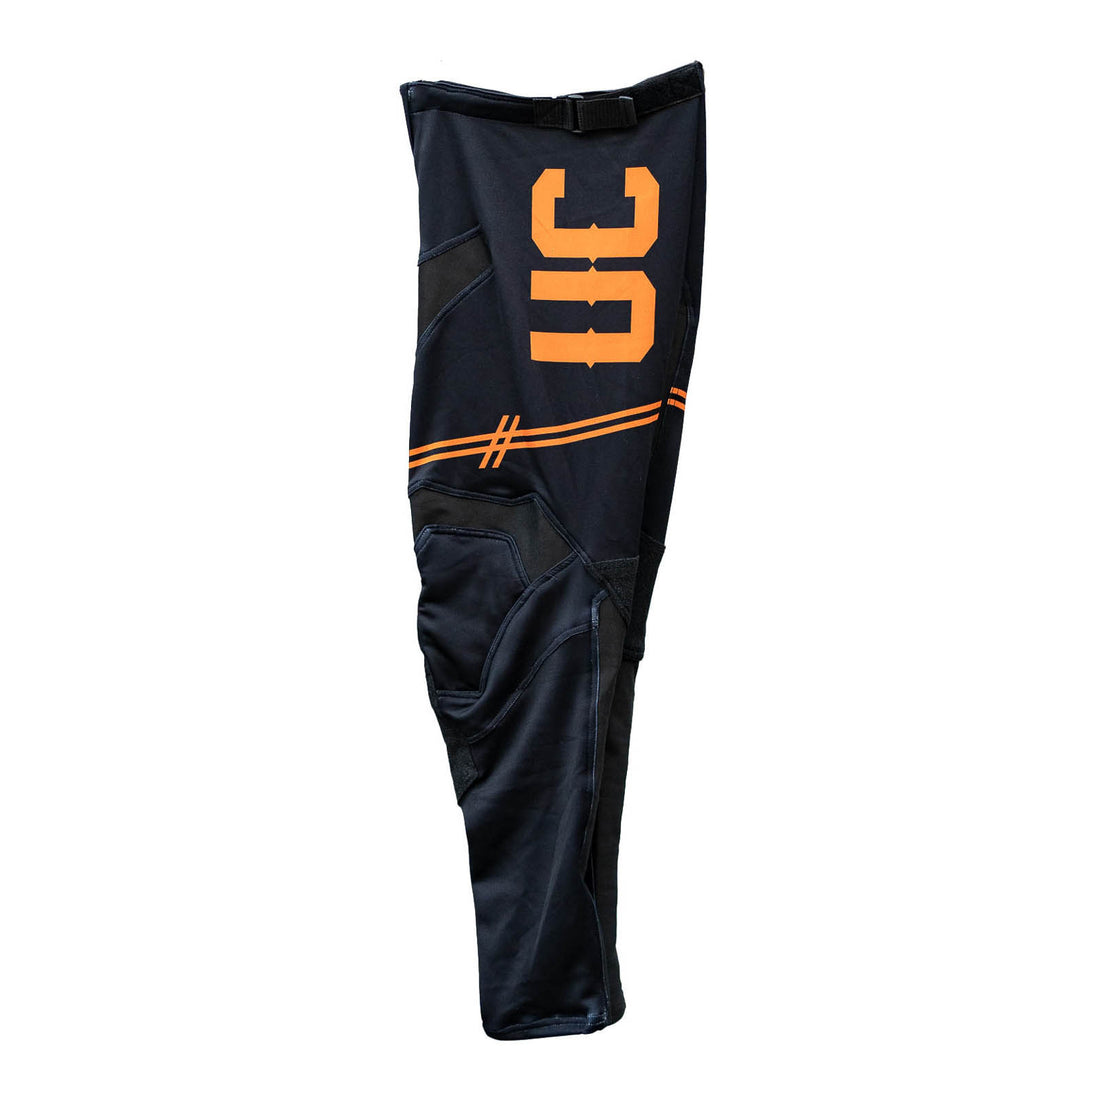 Underclass MX1405 MX Pants - Black / Orange